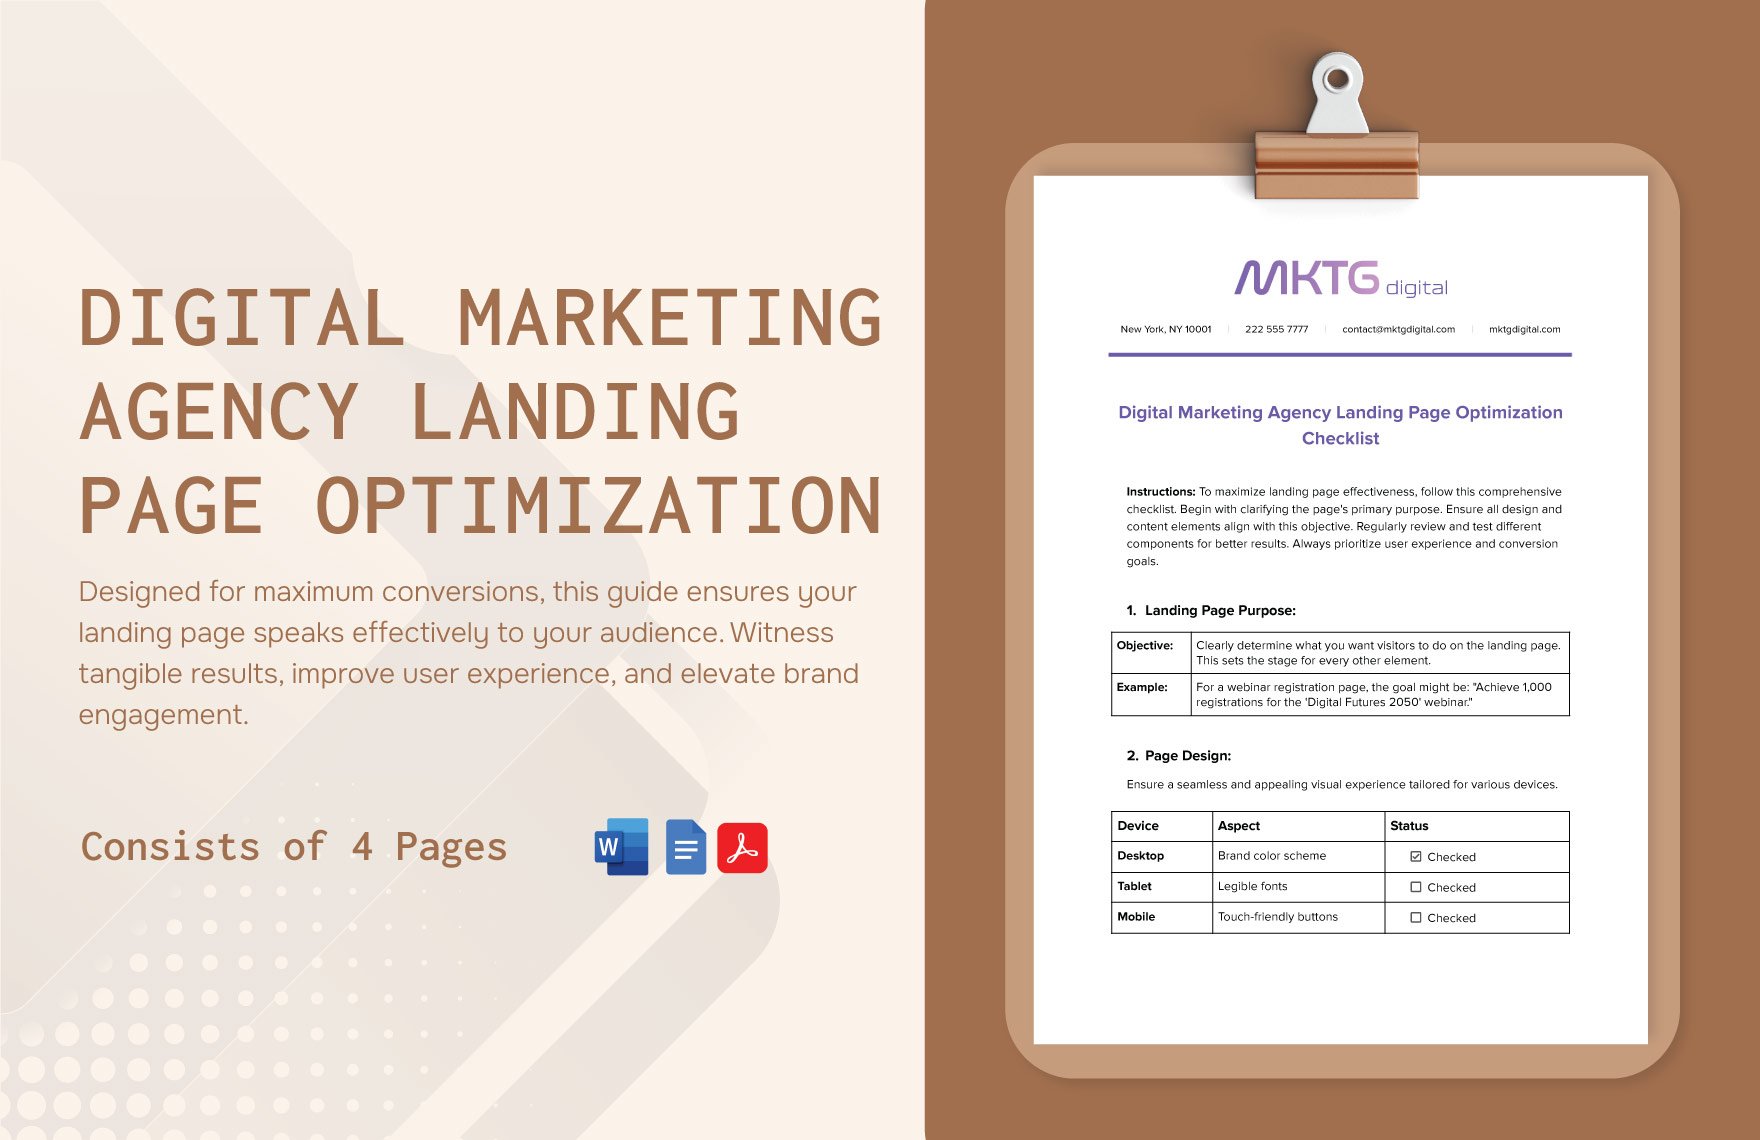 Digital Marketing Agency Landing Page Optimization Checklist Template in Word, Google Docs, PDF